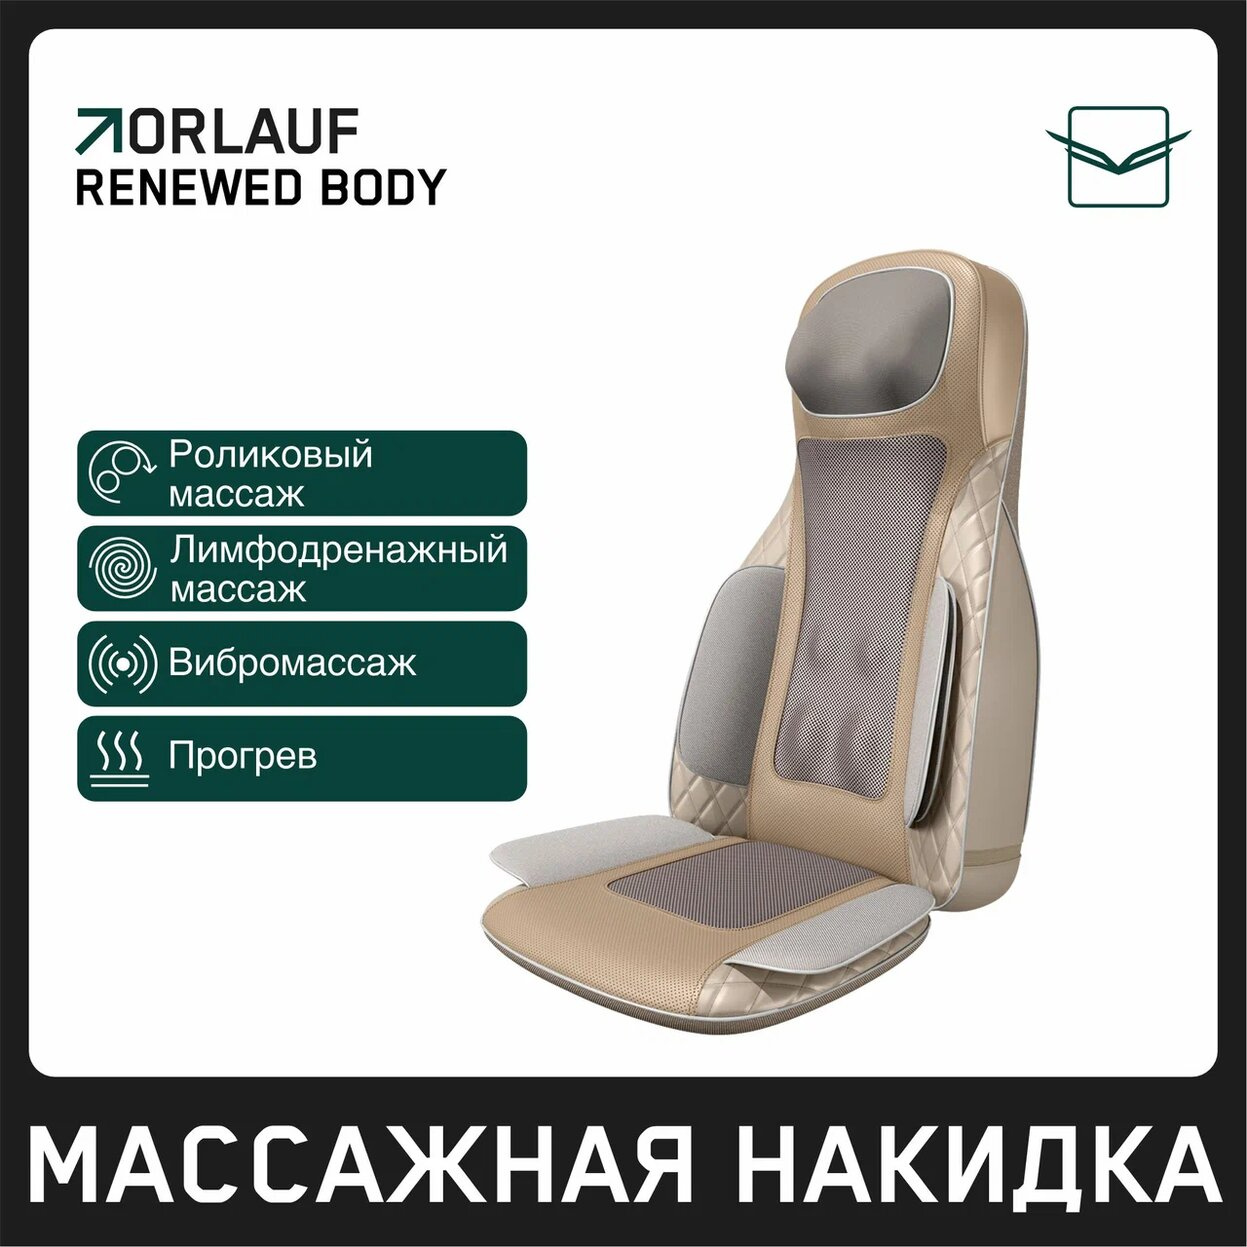 Orlauf Renewed Body из каталога устройств для массажа в Москве по цене 39900 ₽